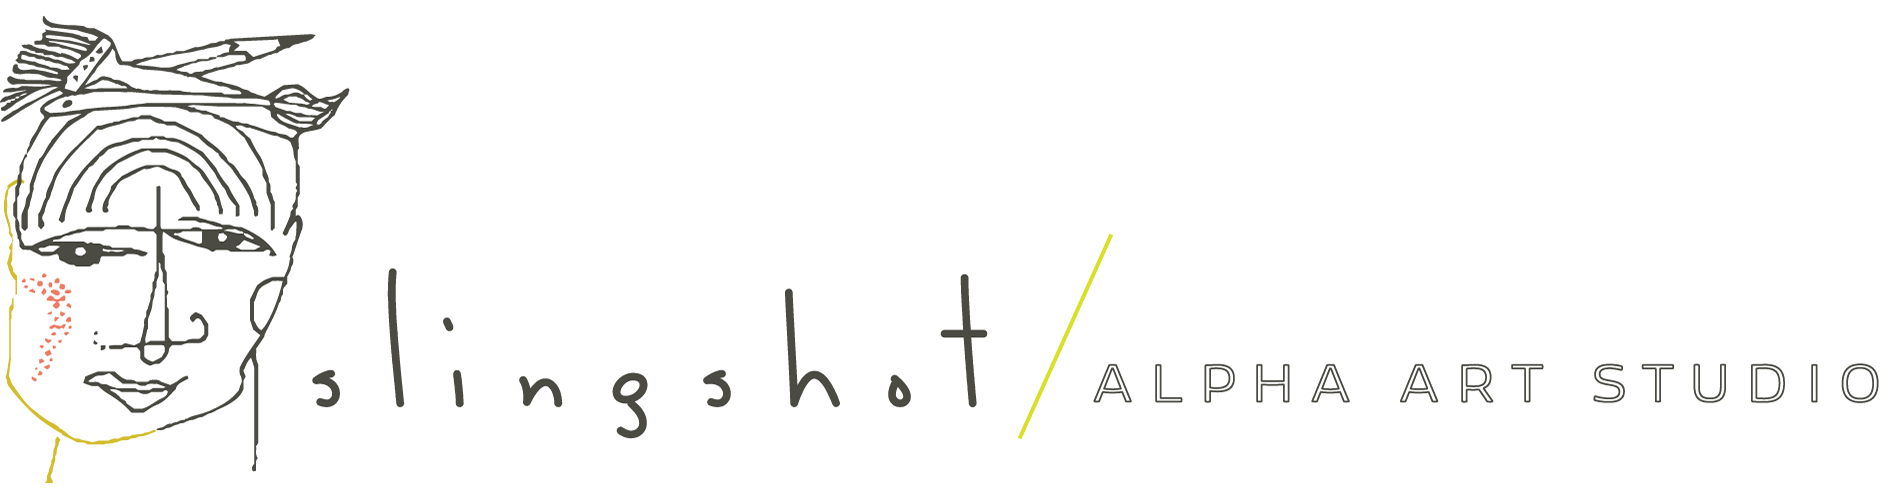 slingshot / ALPHA ART STUDIO